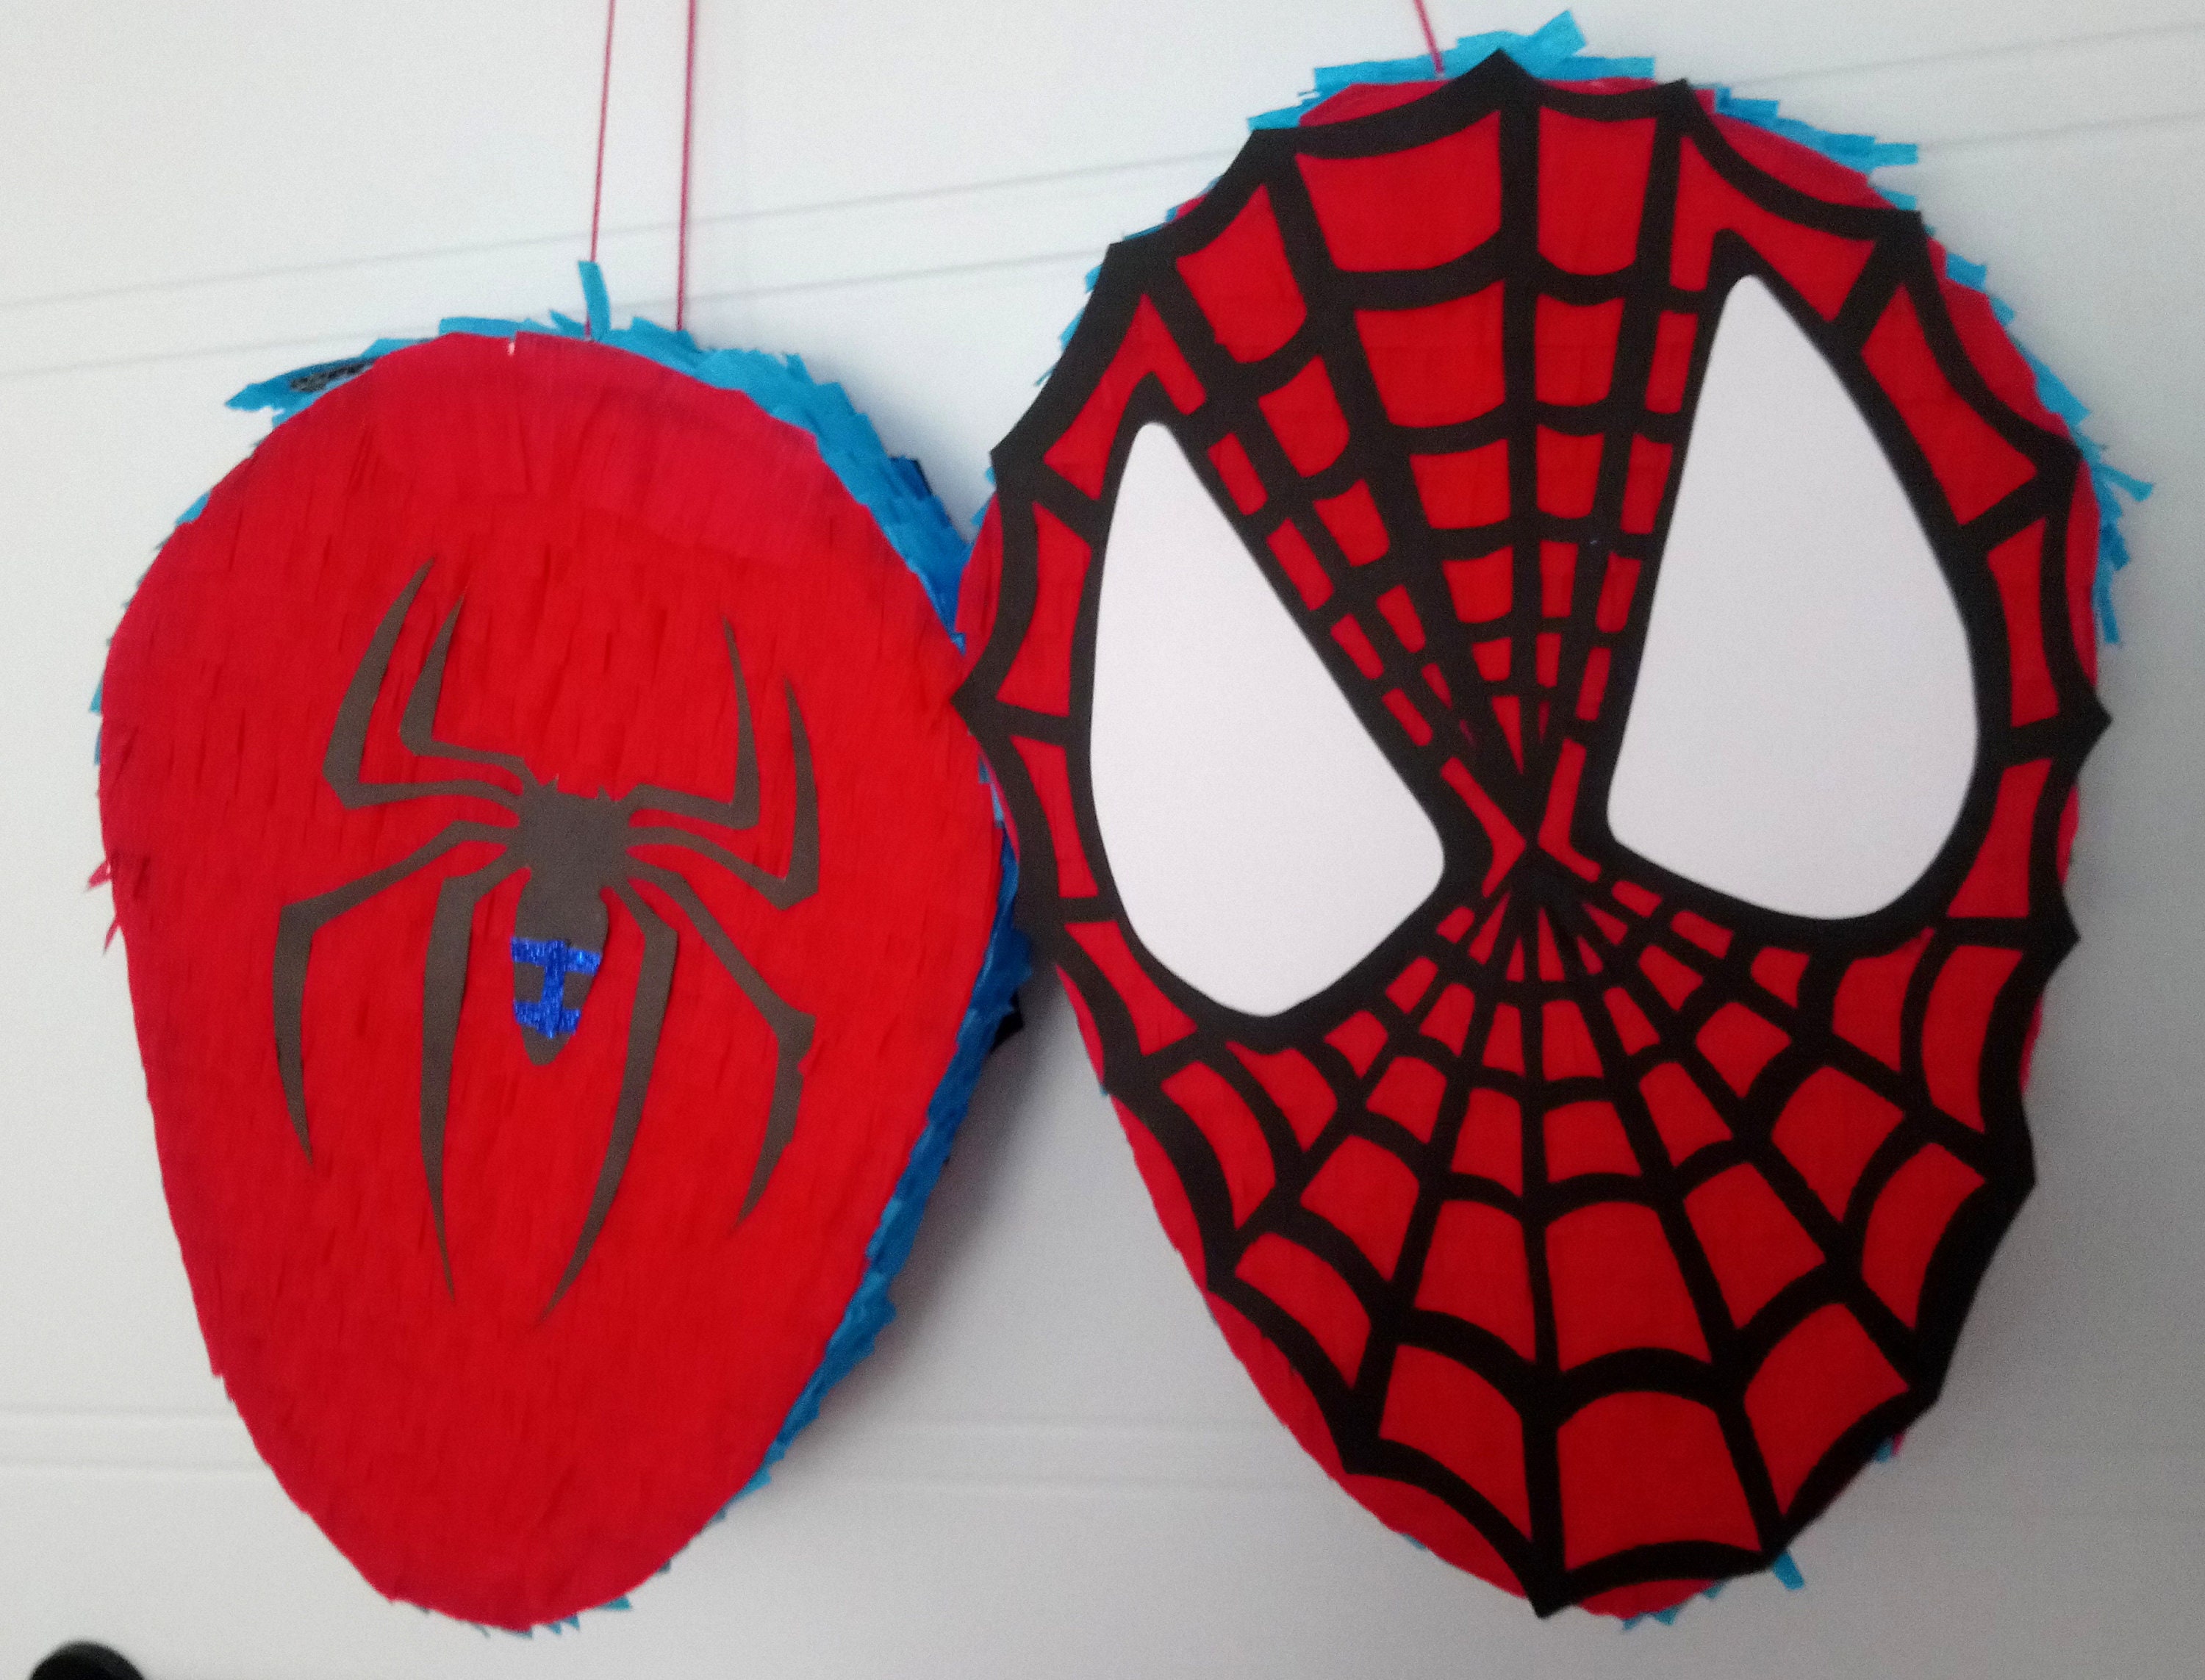 Piñata Spiderman, Piñata Spiderman modelo europeo, para rom…